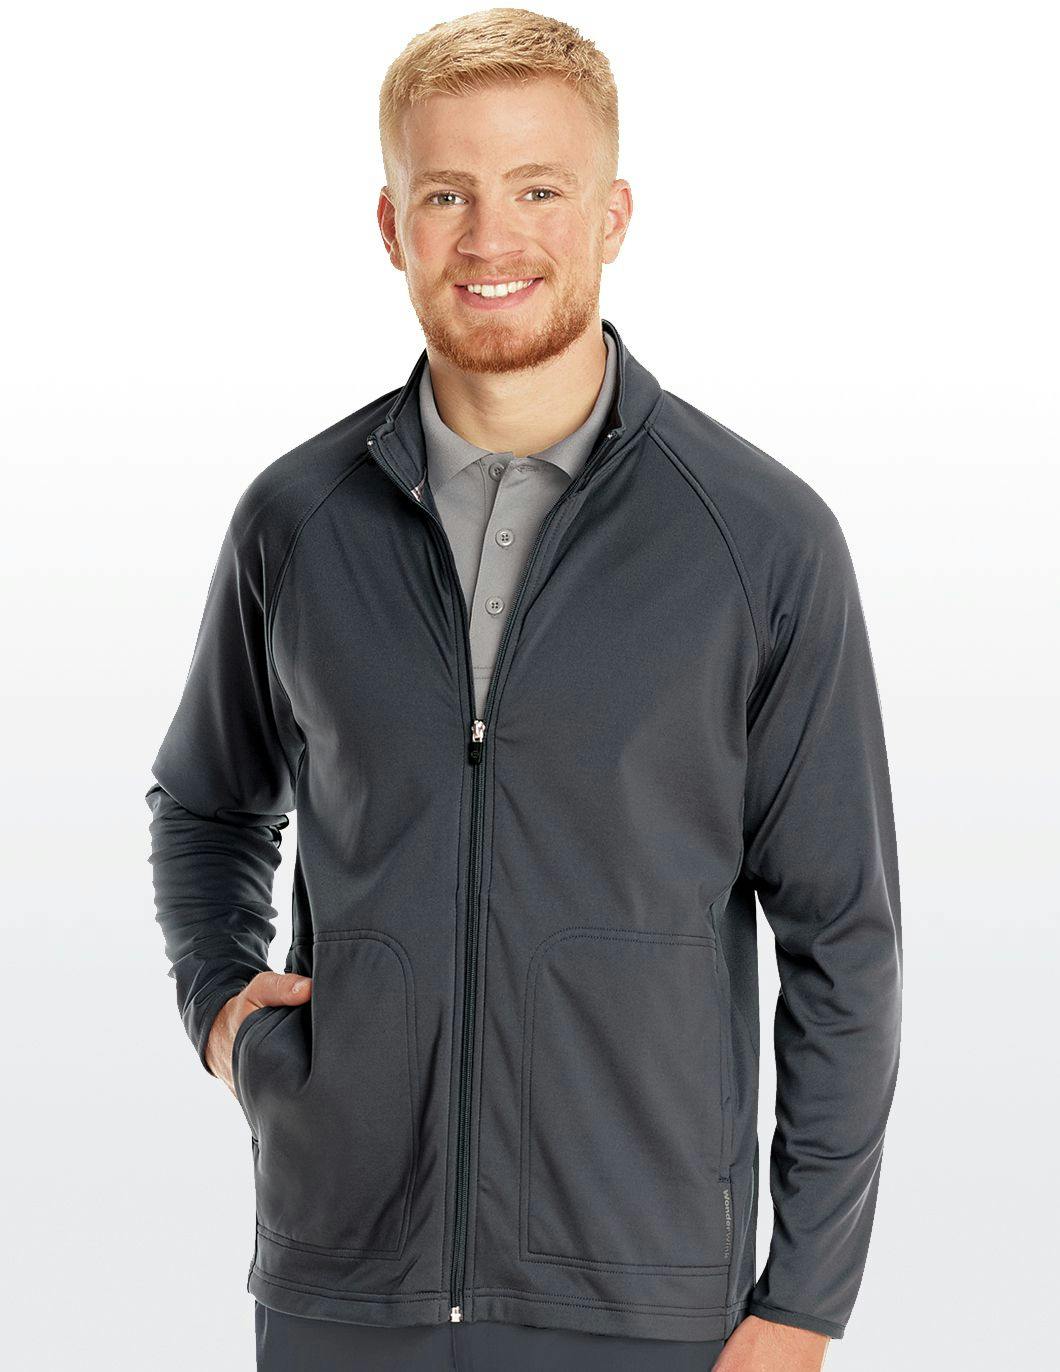 wonderwink-W123-mens-fleece-full-zip-jacket